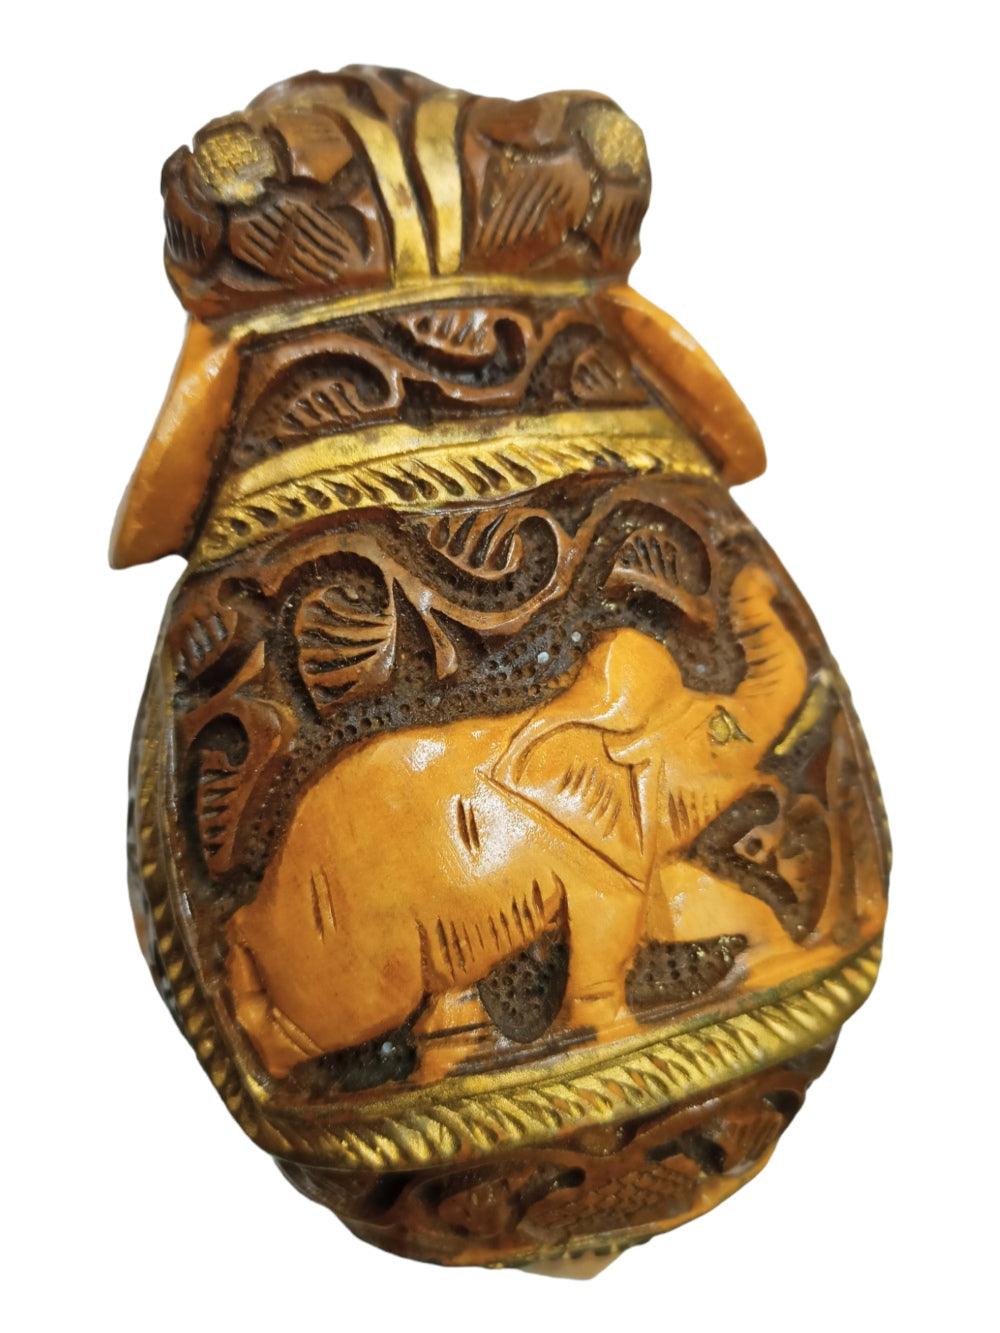 Wooden Elephant | Hand Made | Handicrafts - ZANSKAR ARTS